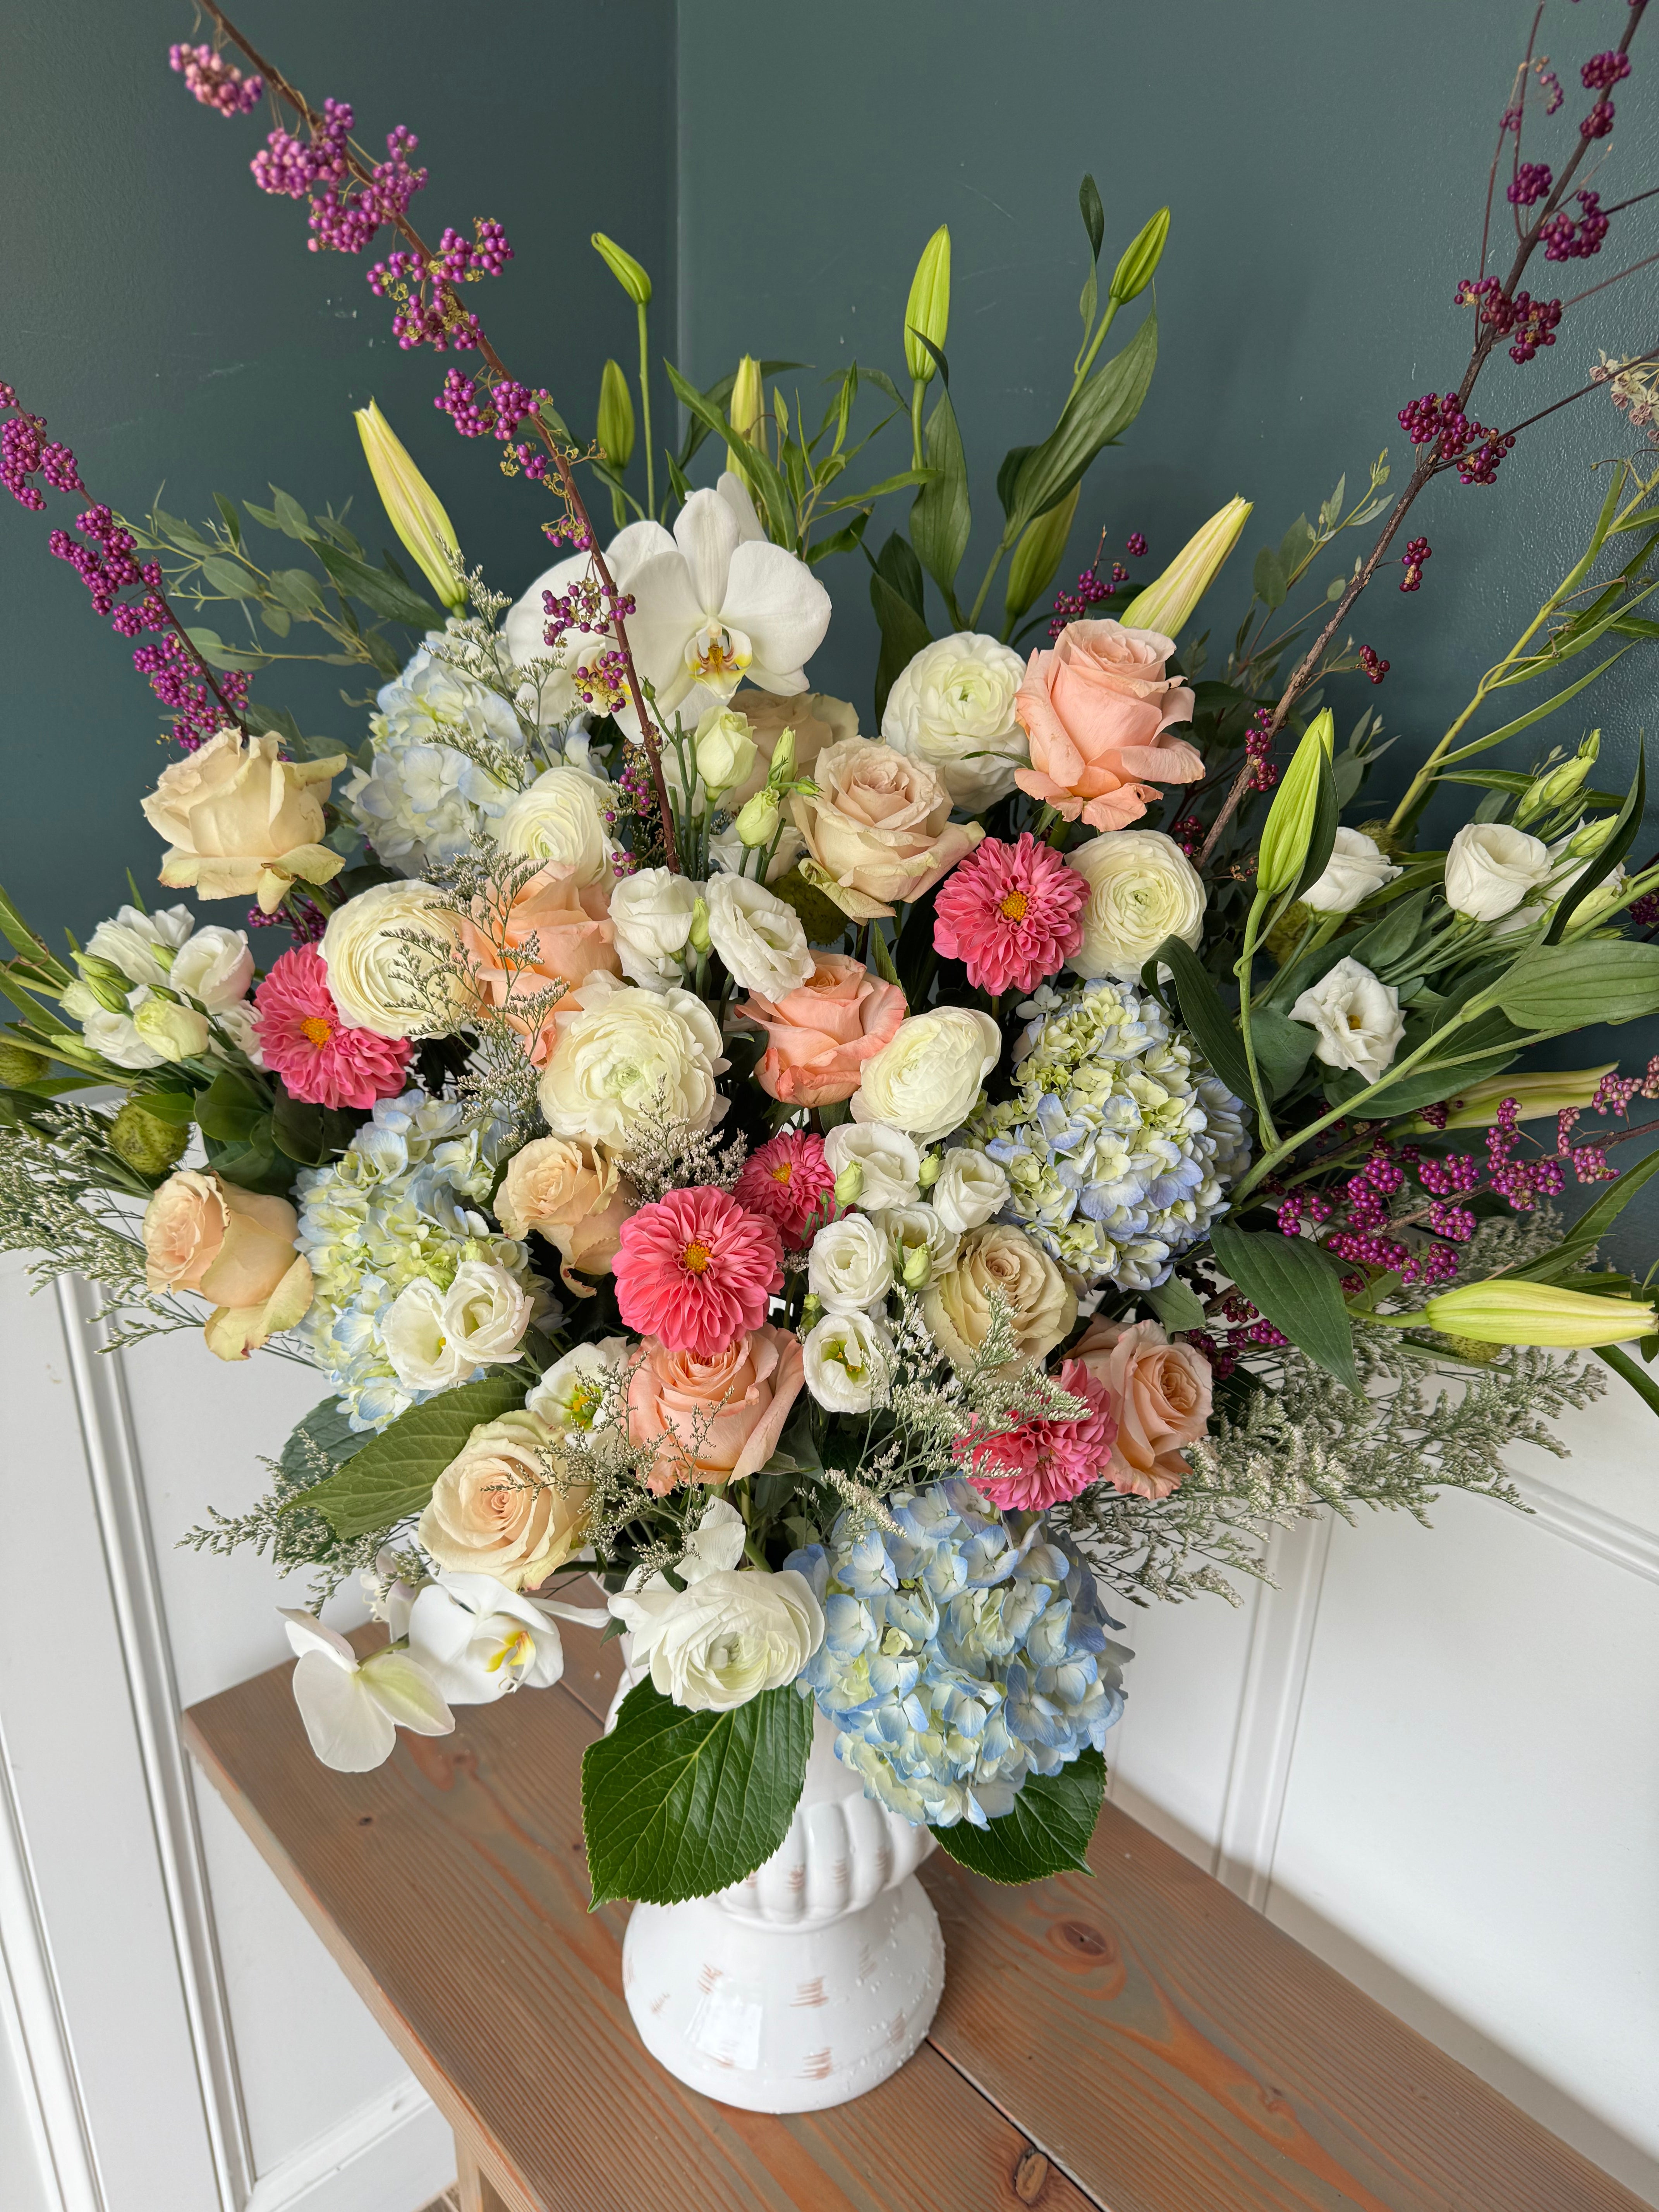 Mother's Day Arrangement in Vase: Over The Top